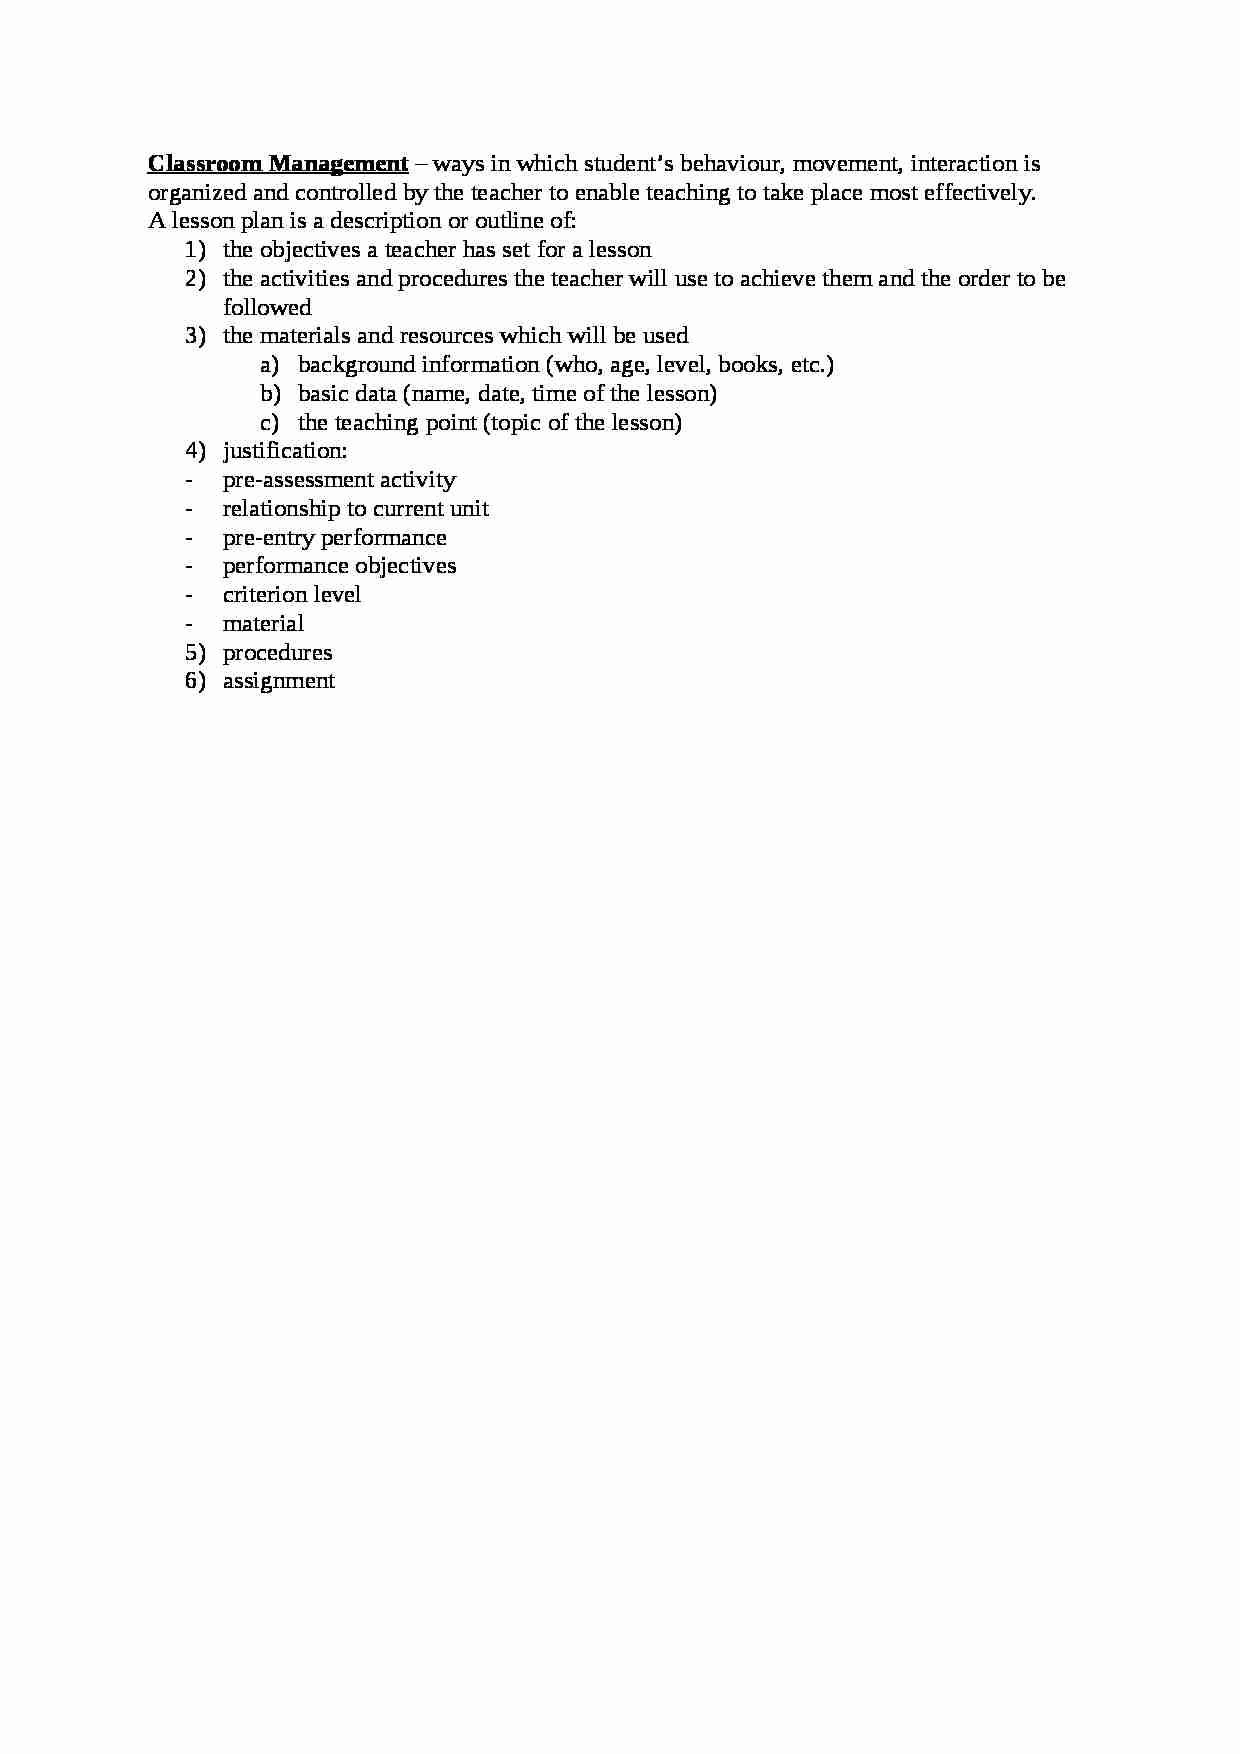 Classroom Management - definition - strona 1